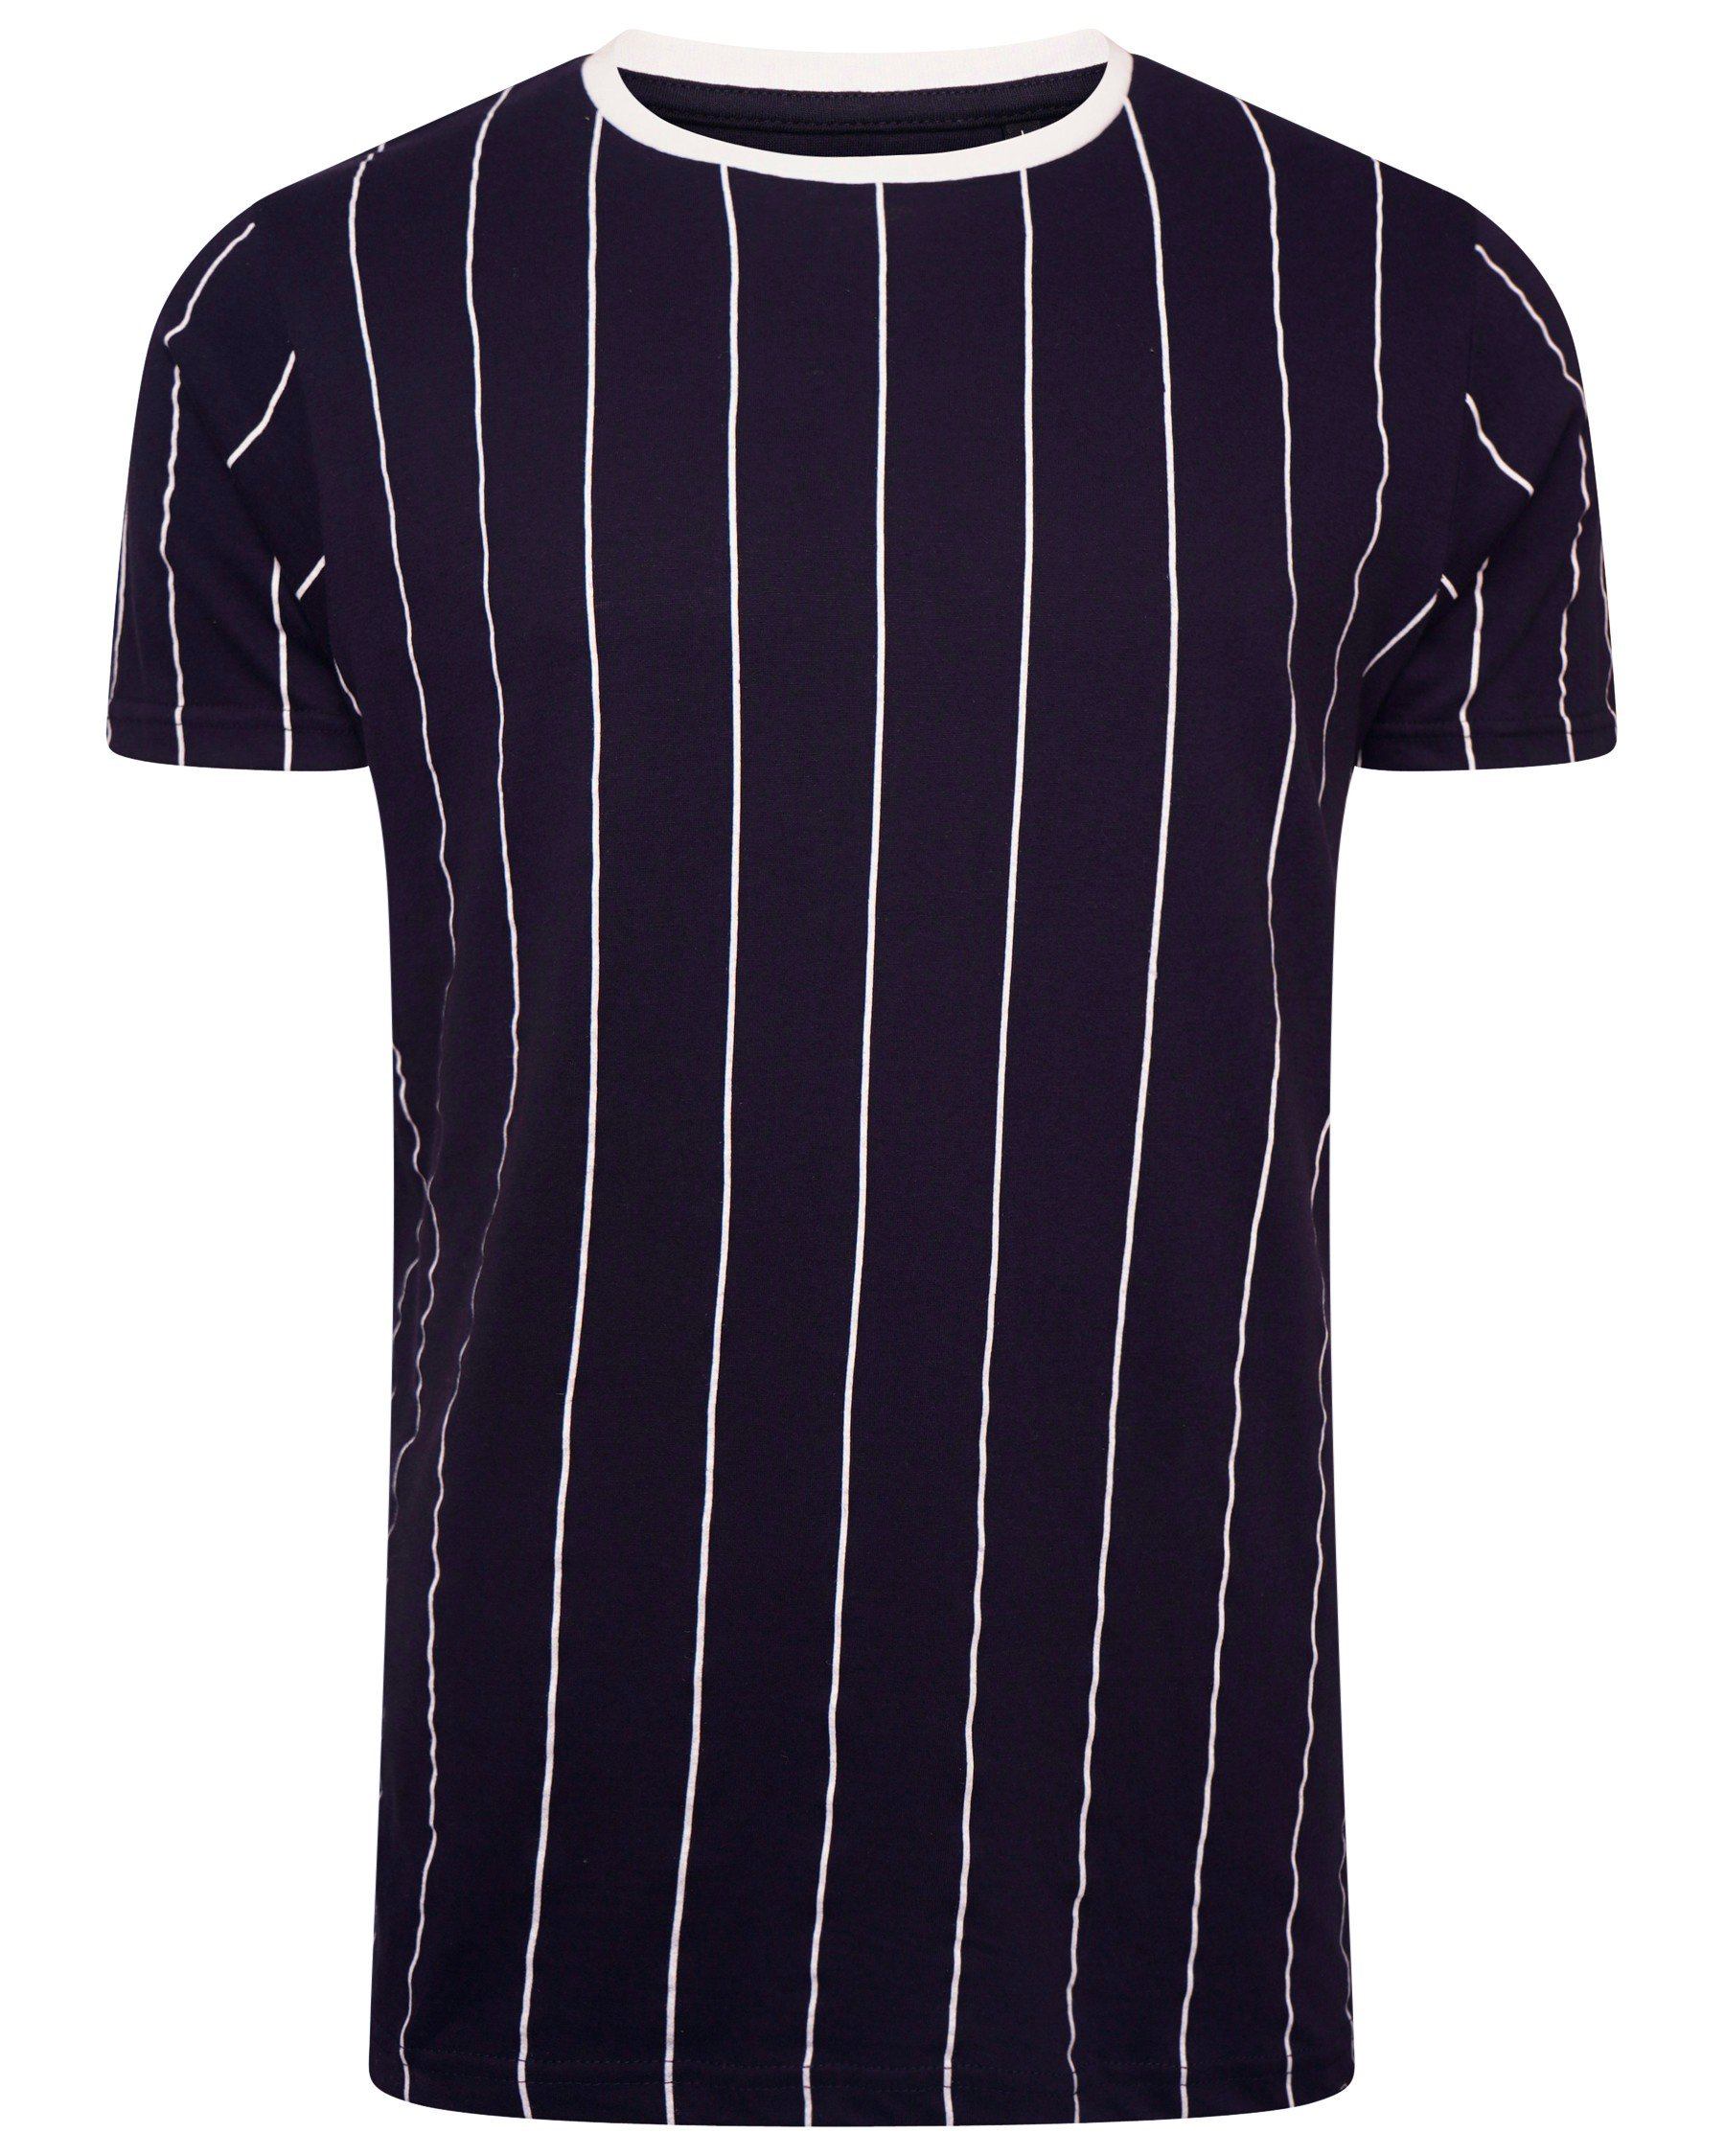 T-Shirts - Vertical Stripe T-Shirt Navy